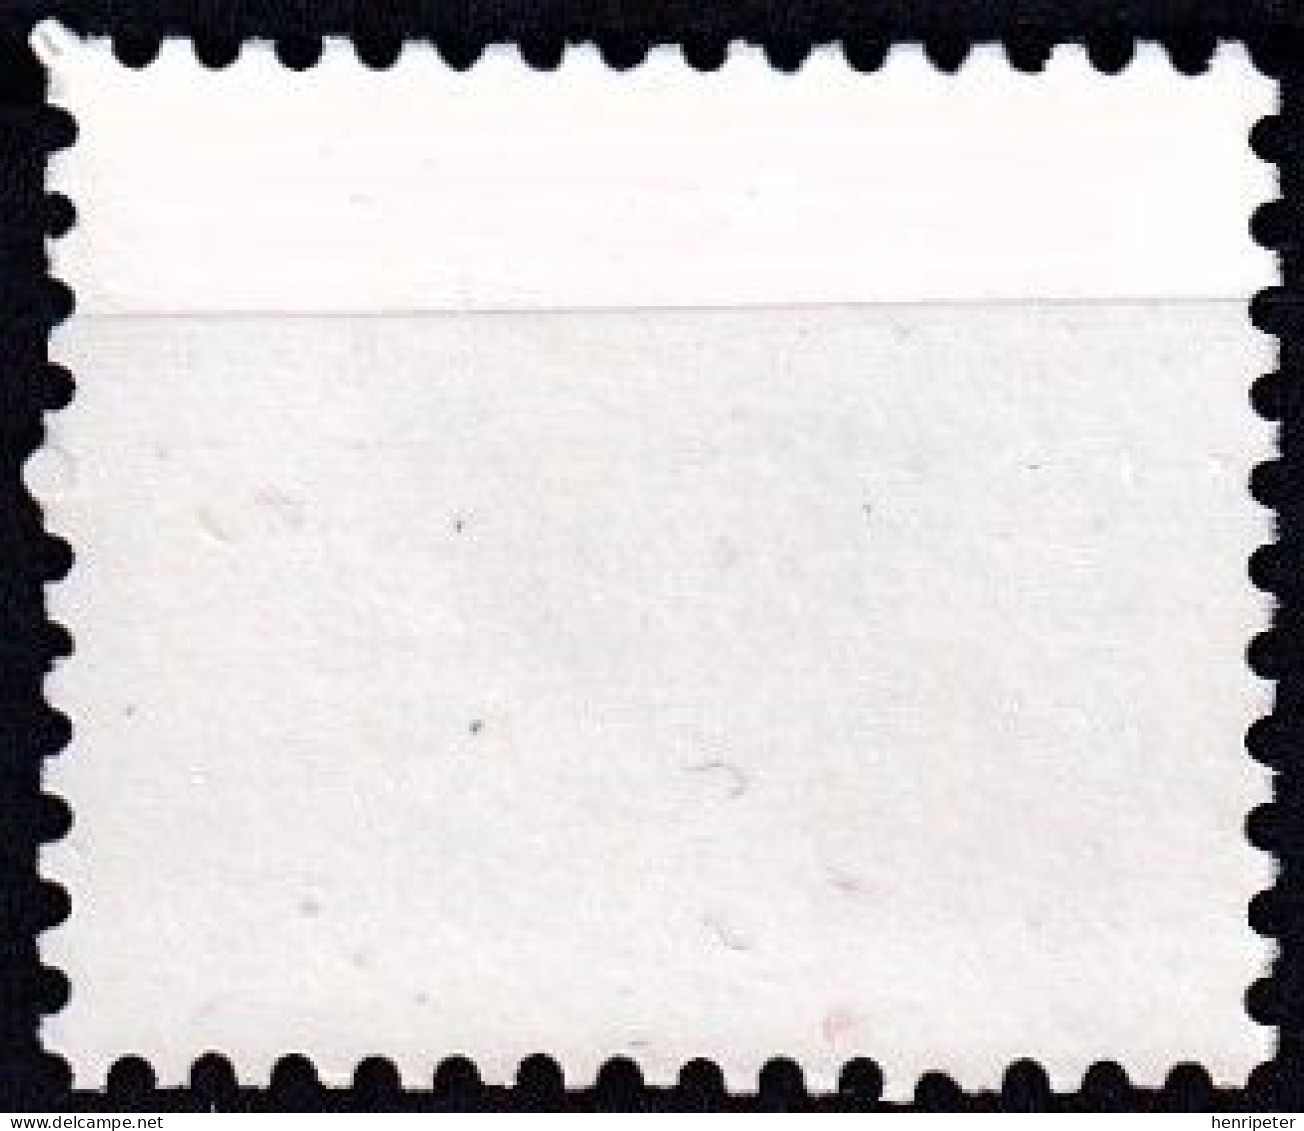 Timbre-poste Gommé Dentelé Neuf** - Figures Chiffres Mark Post And Emblem - N° 1745 (Yvert Et Tellier) - Brésil 1985 - Neufs